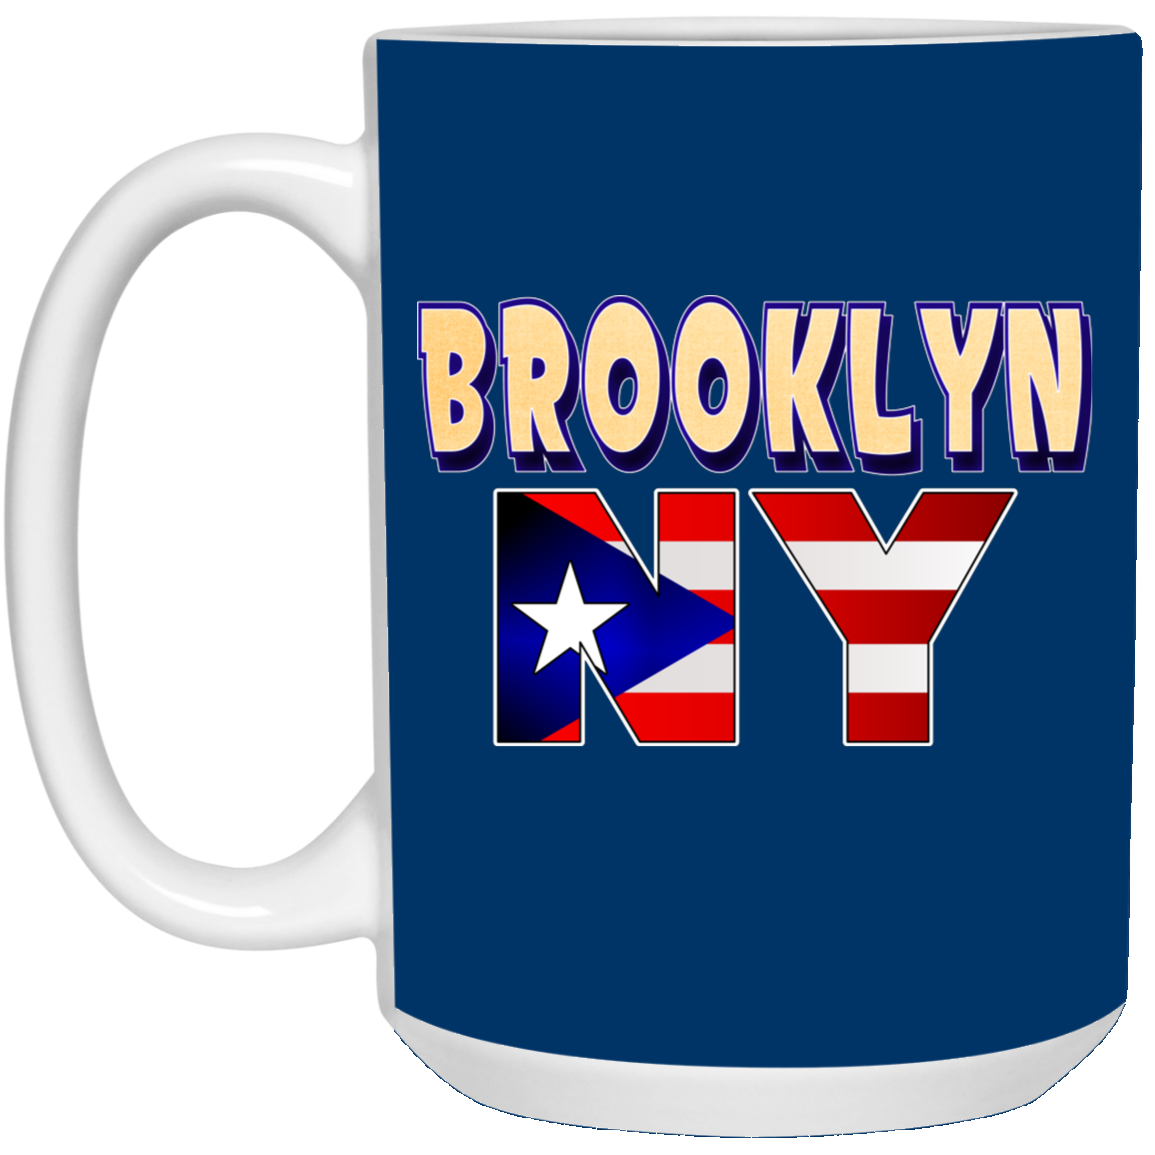 Brooklyn NY 15 oz. White Mug - Puerto Rican Pride